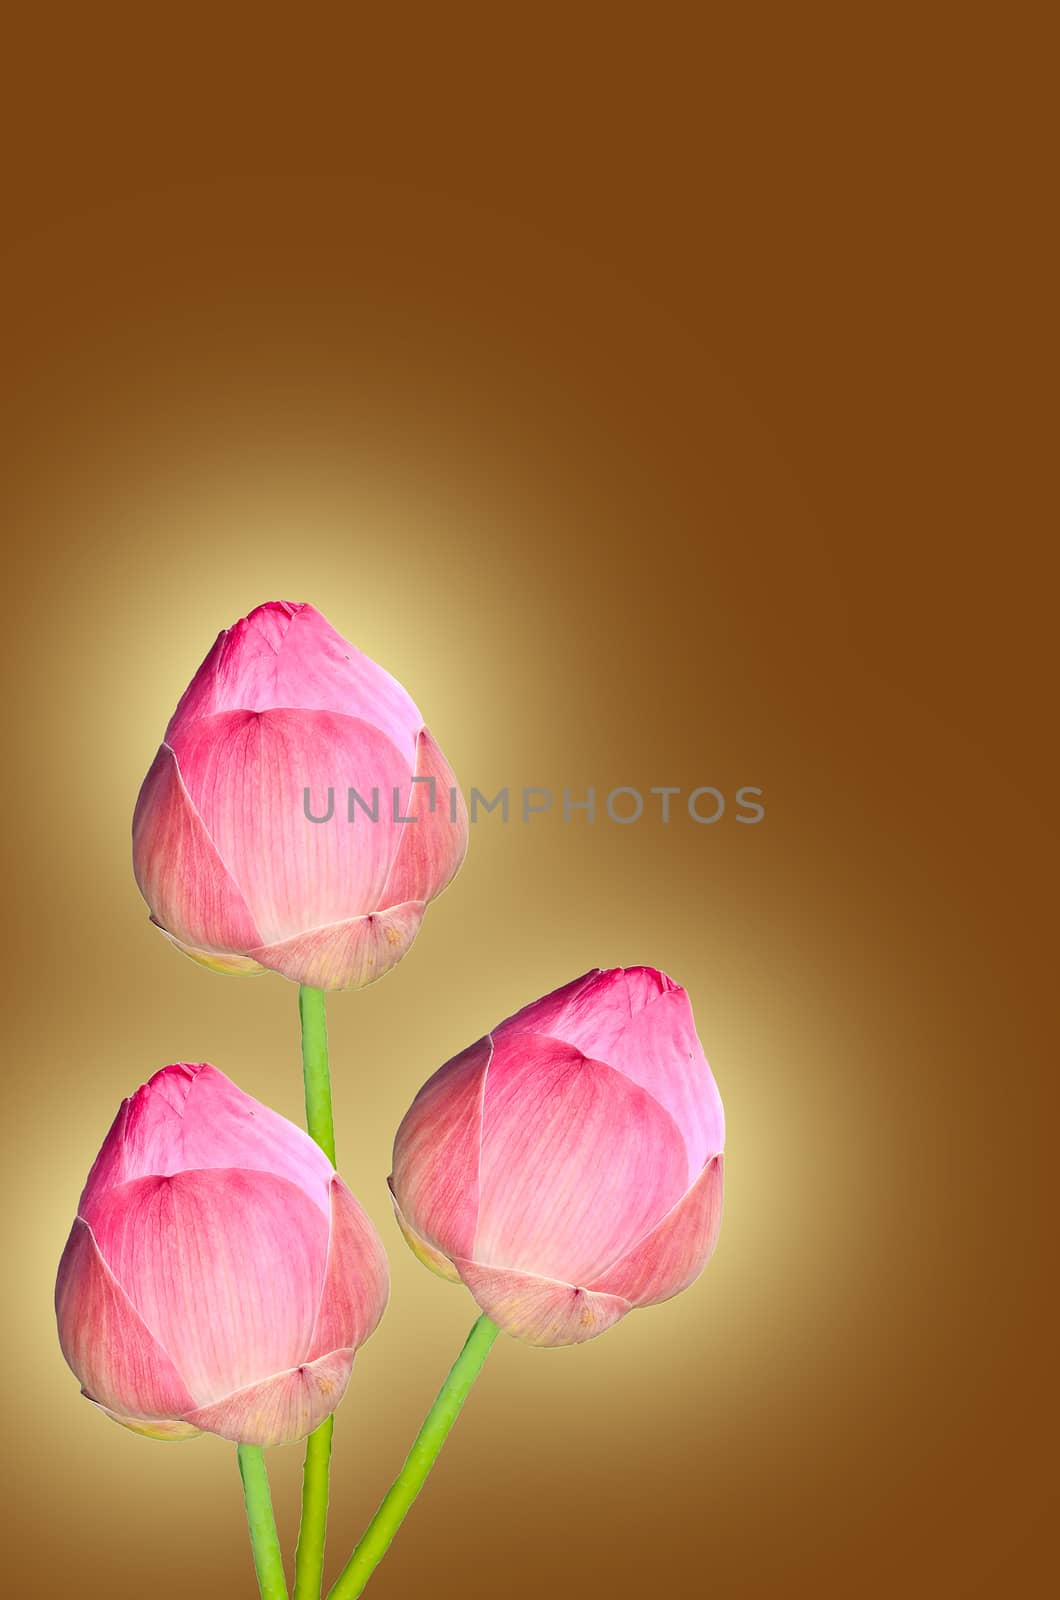 Lotus flower by raweenuttapong